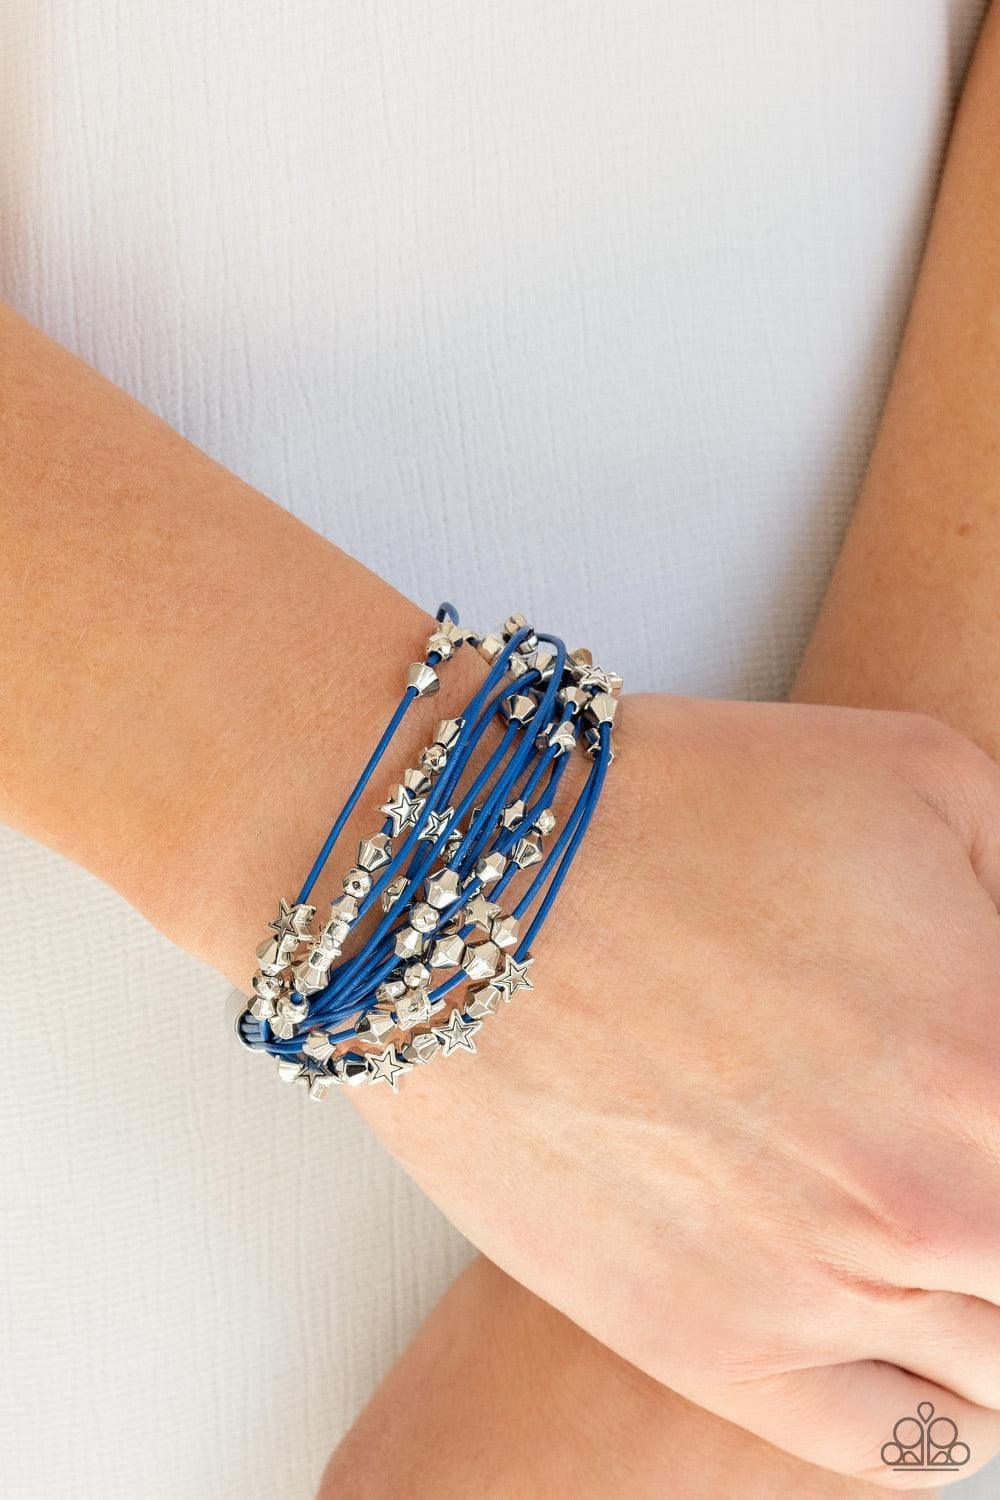 Paparazzi Accessories - Star-studded Affair - Blue Bracelet - Bling by JessieK